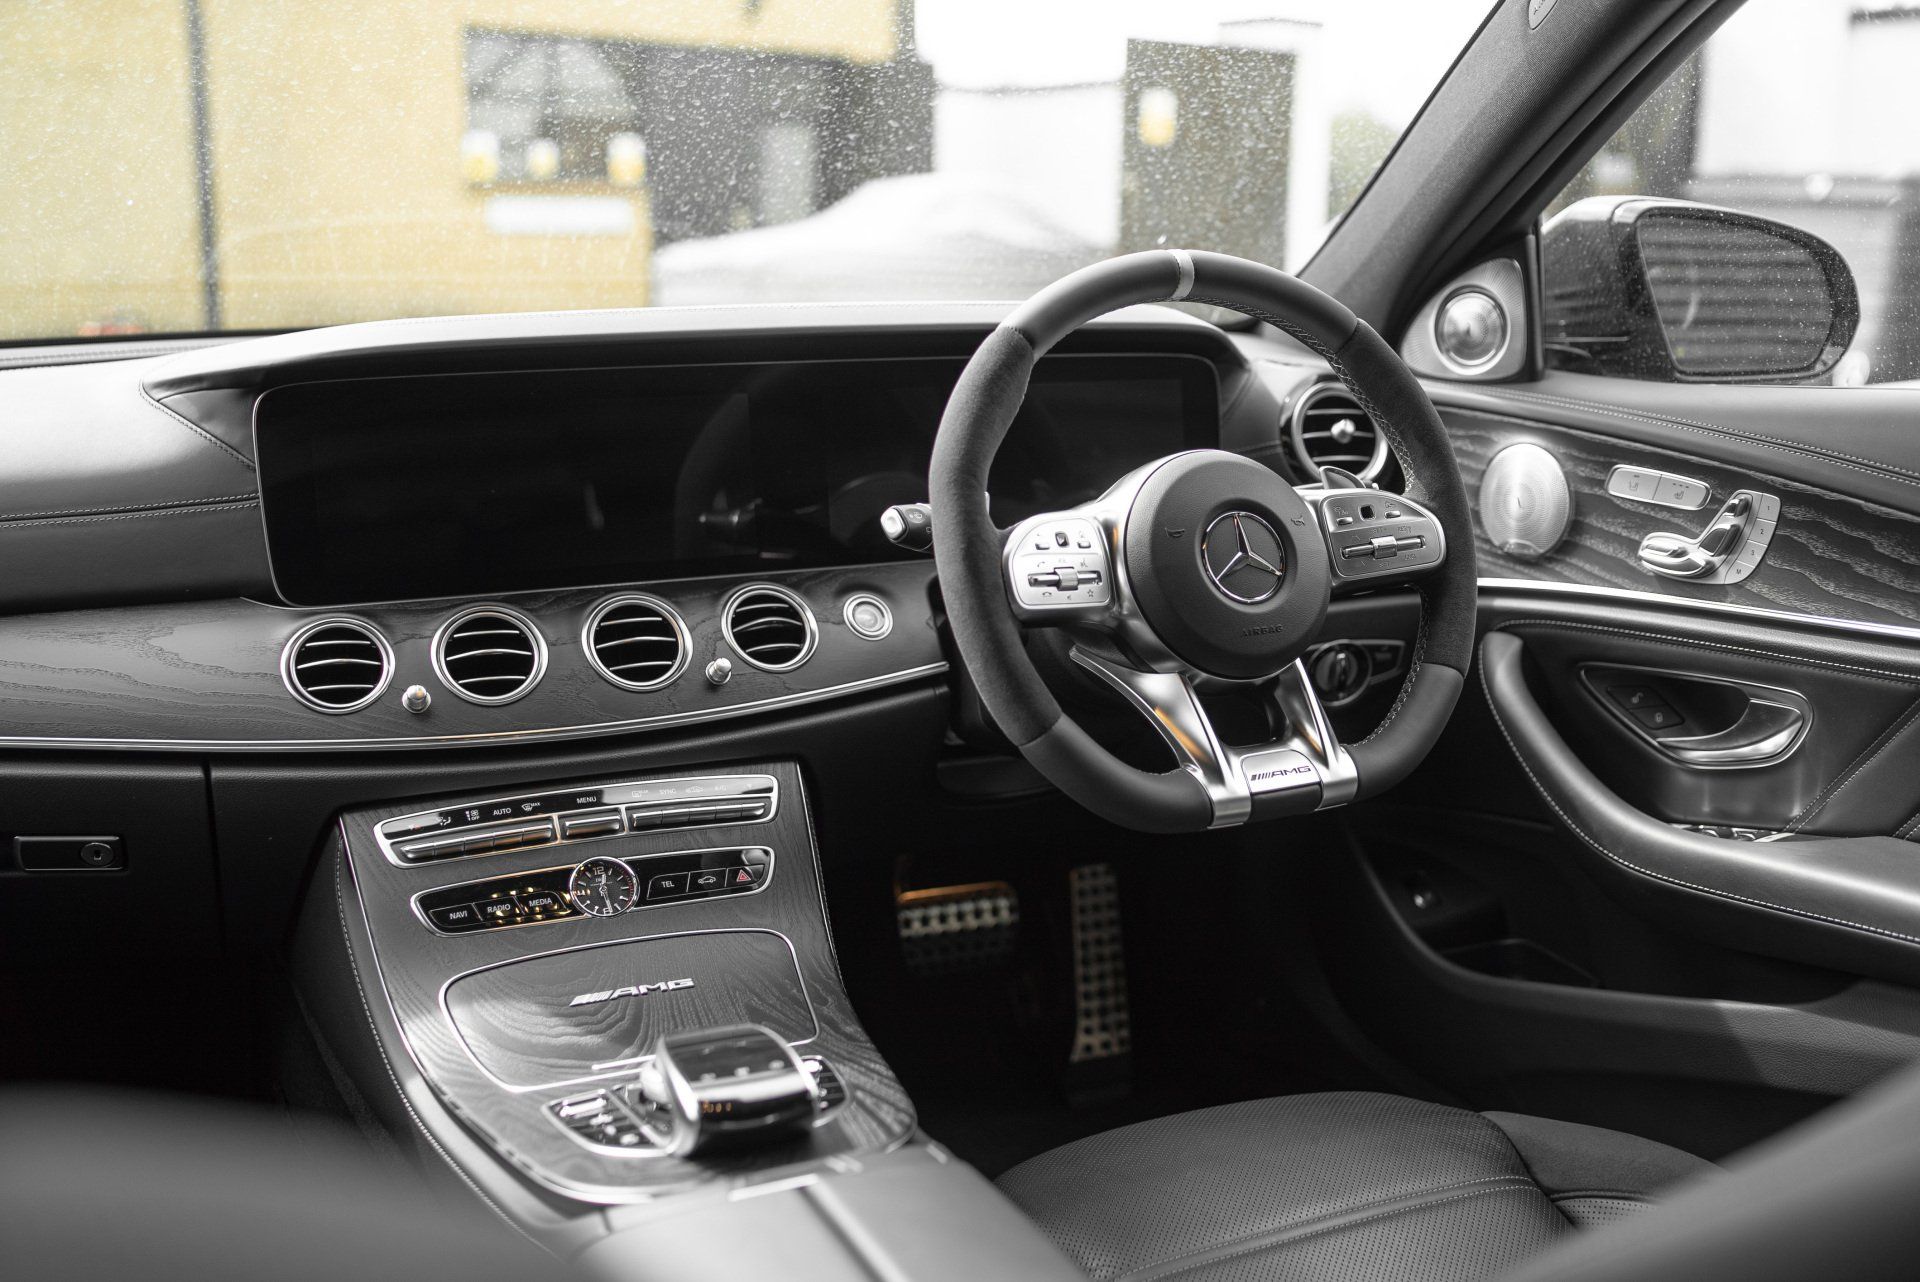 Mercedes-Benz E63 AMG Interior steering wheel retrim leather alcantara stitching black hand stitch